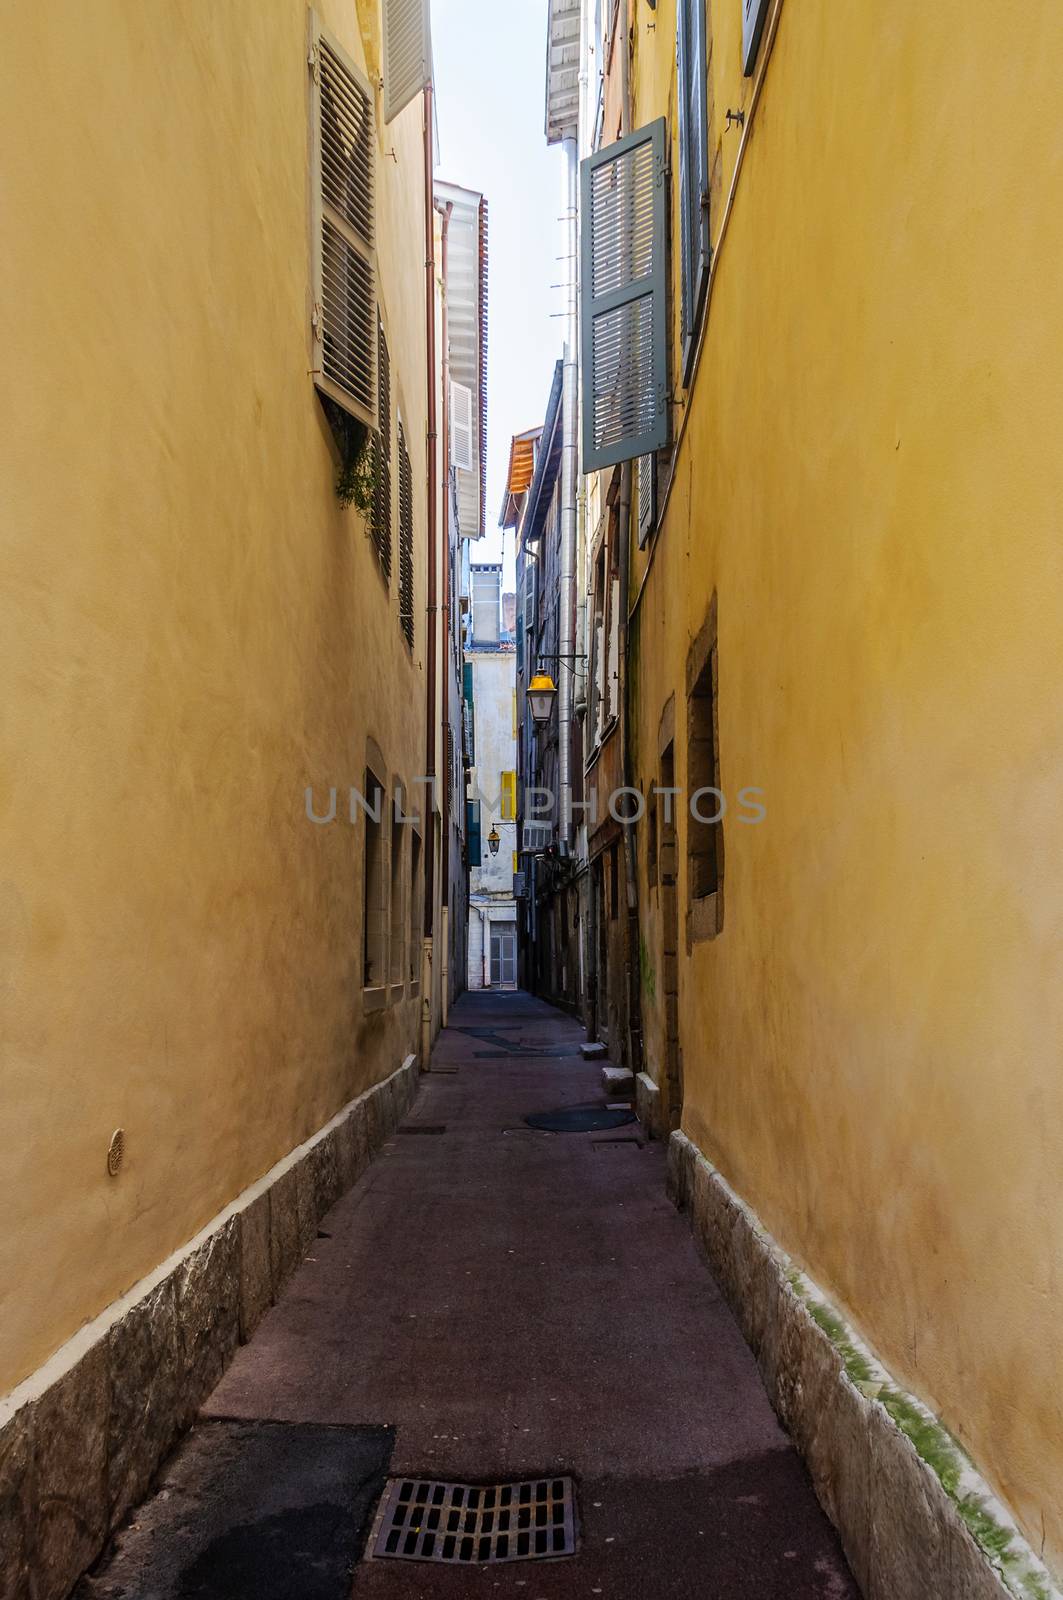 Narrow street in Bayonne by dutourdumonde